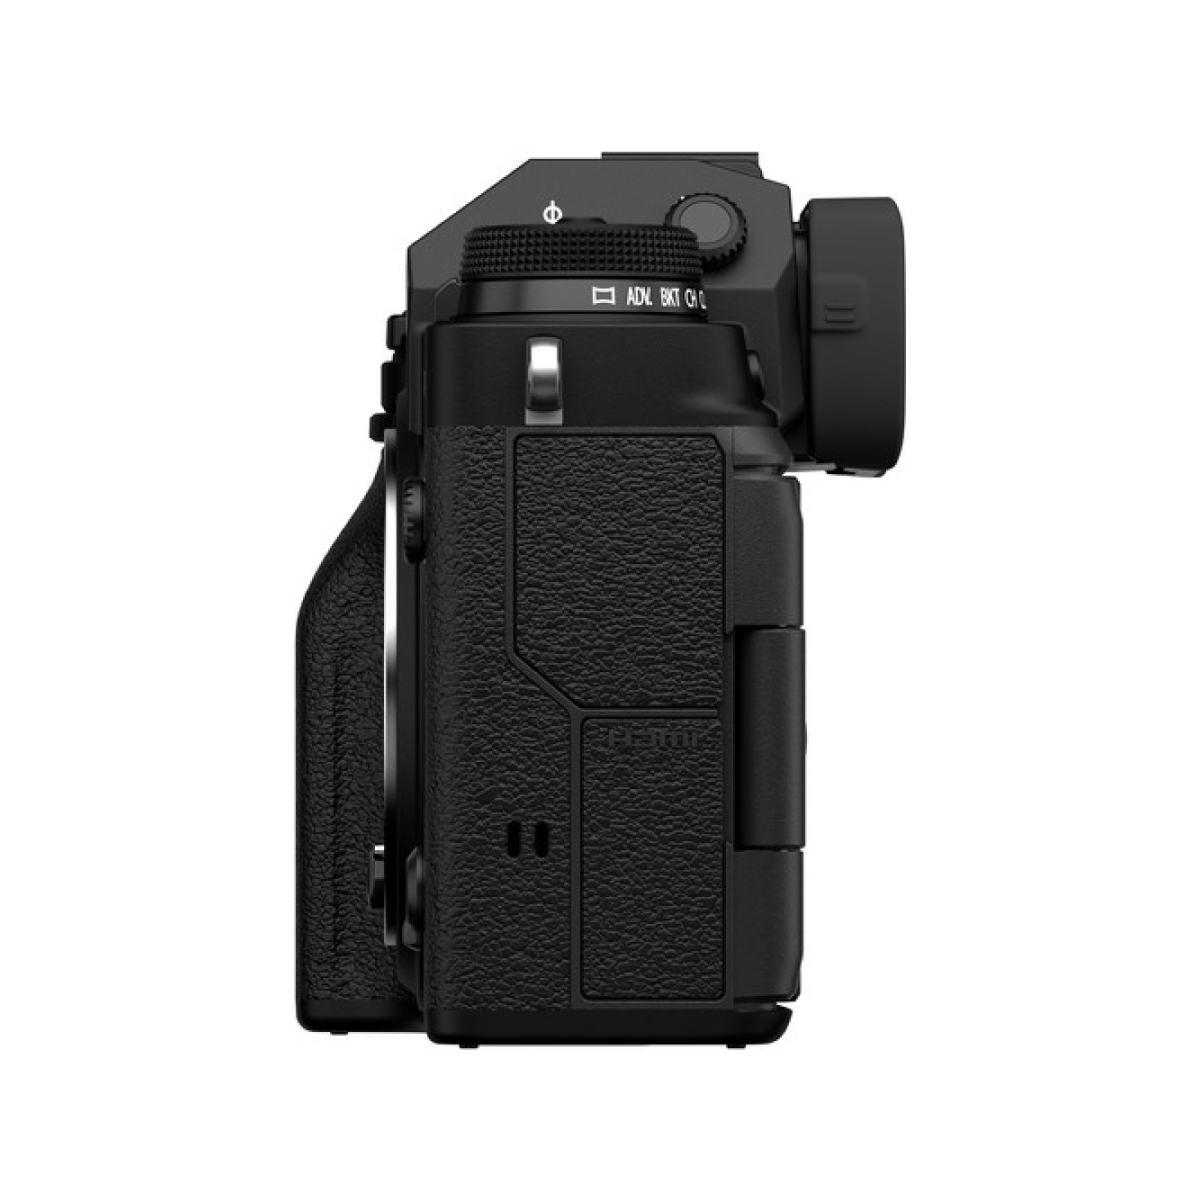 Fujifilm X-T4 26 MP Mirrorless Camera Body with XF16-80mm Lens – Black (10)